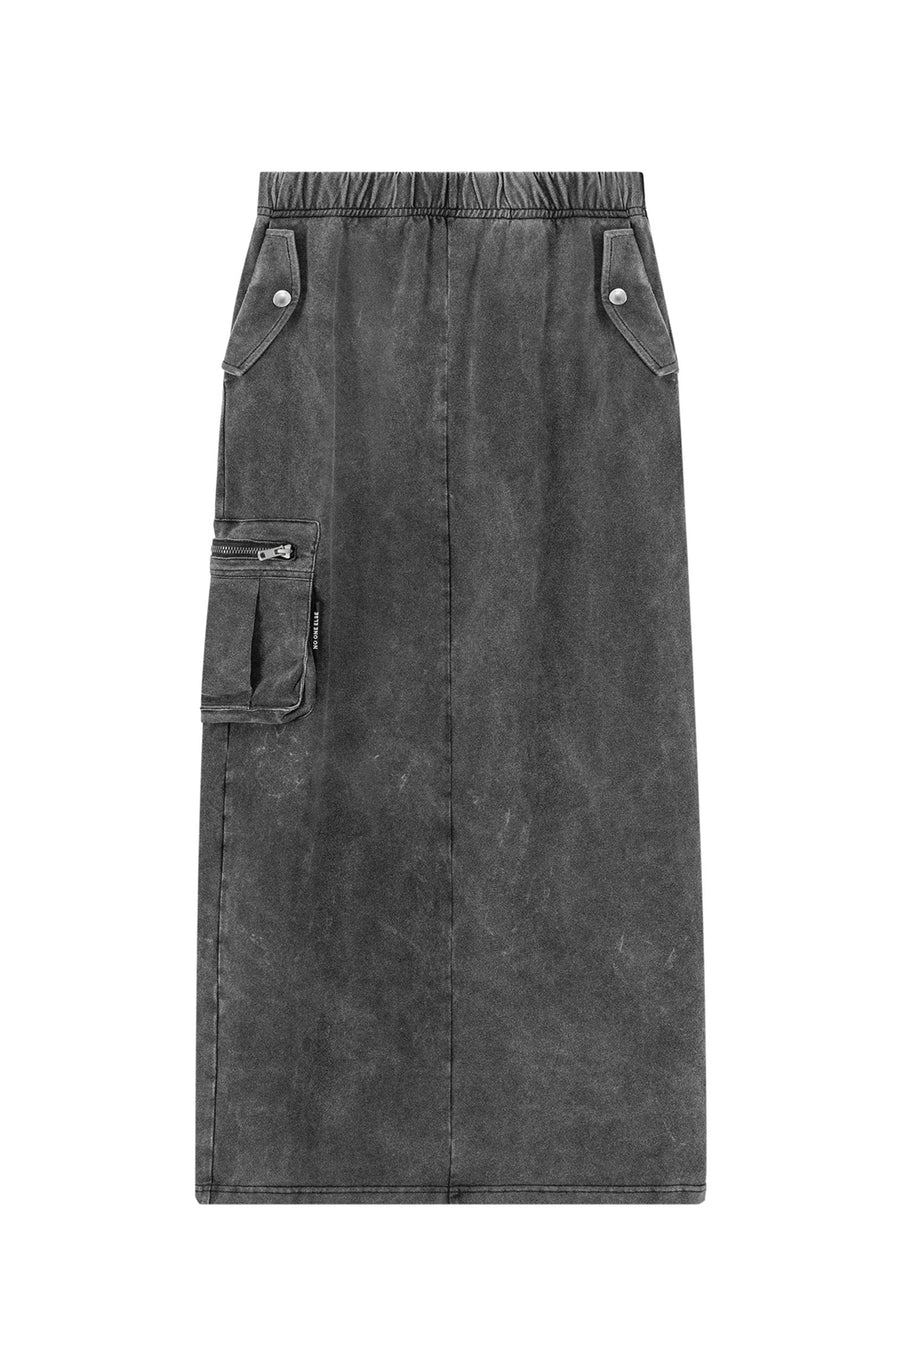 CHUU Long Pocket Banded Pocket Skirt